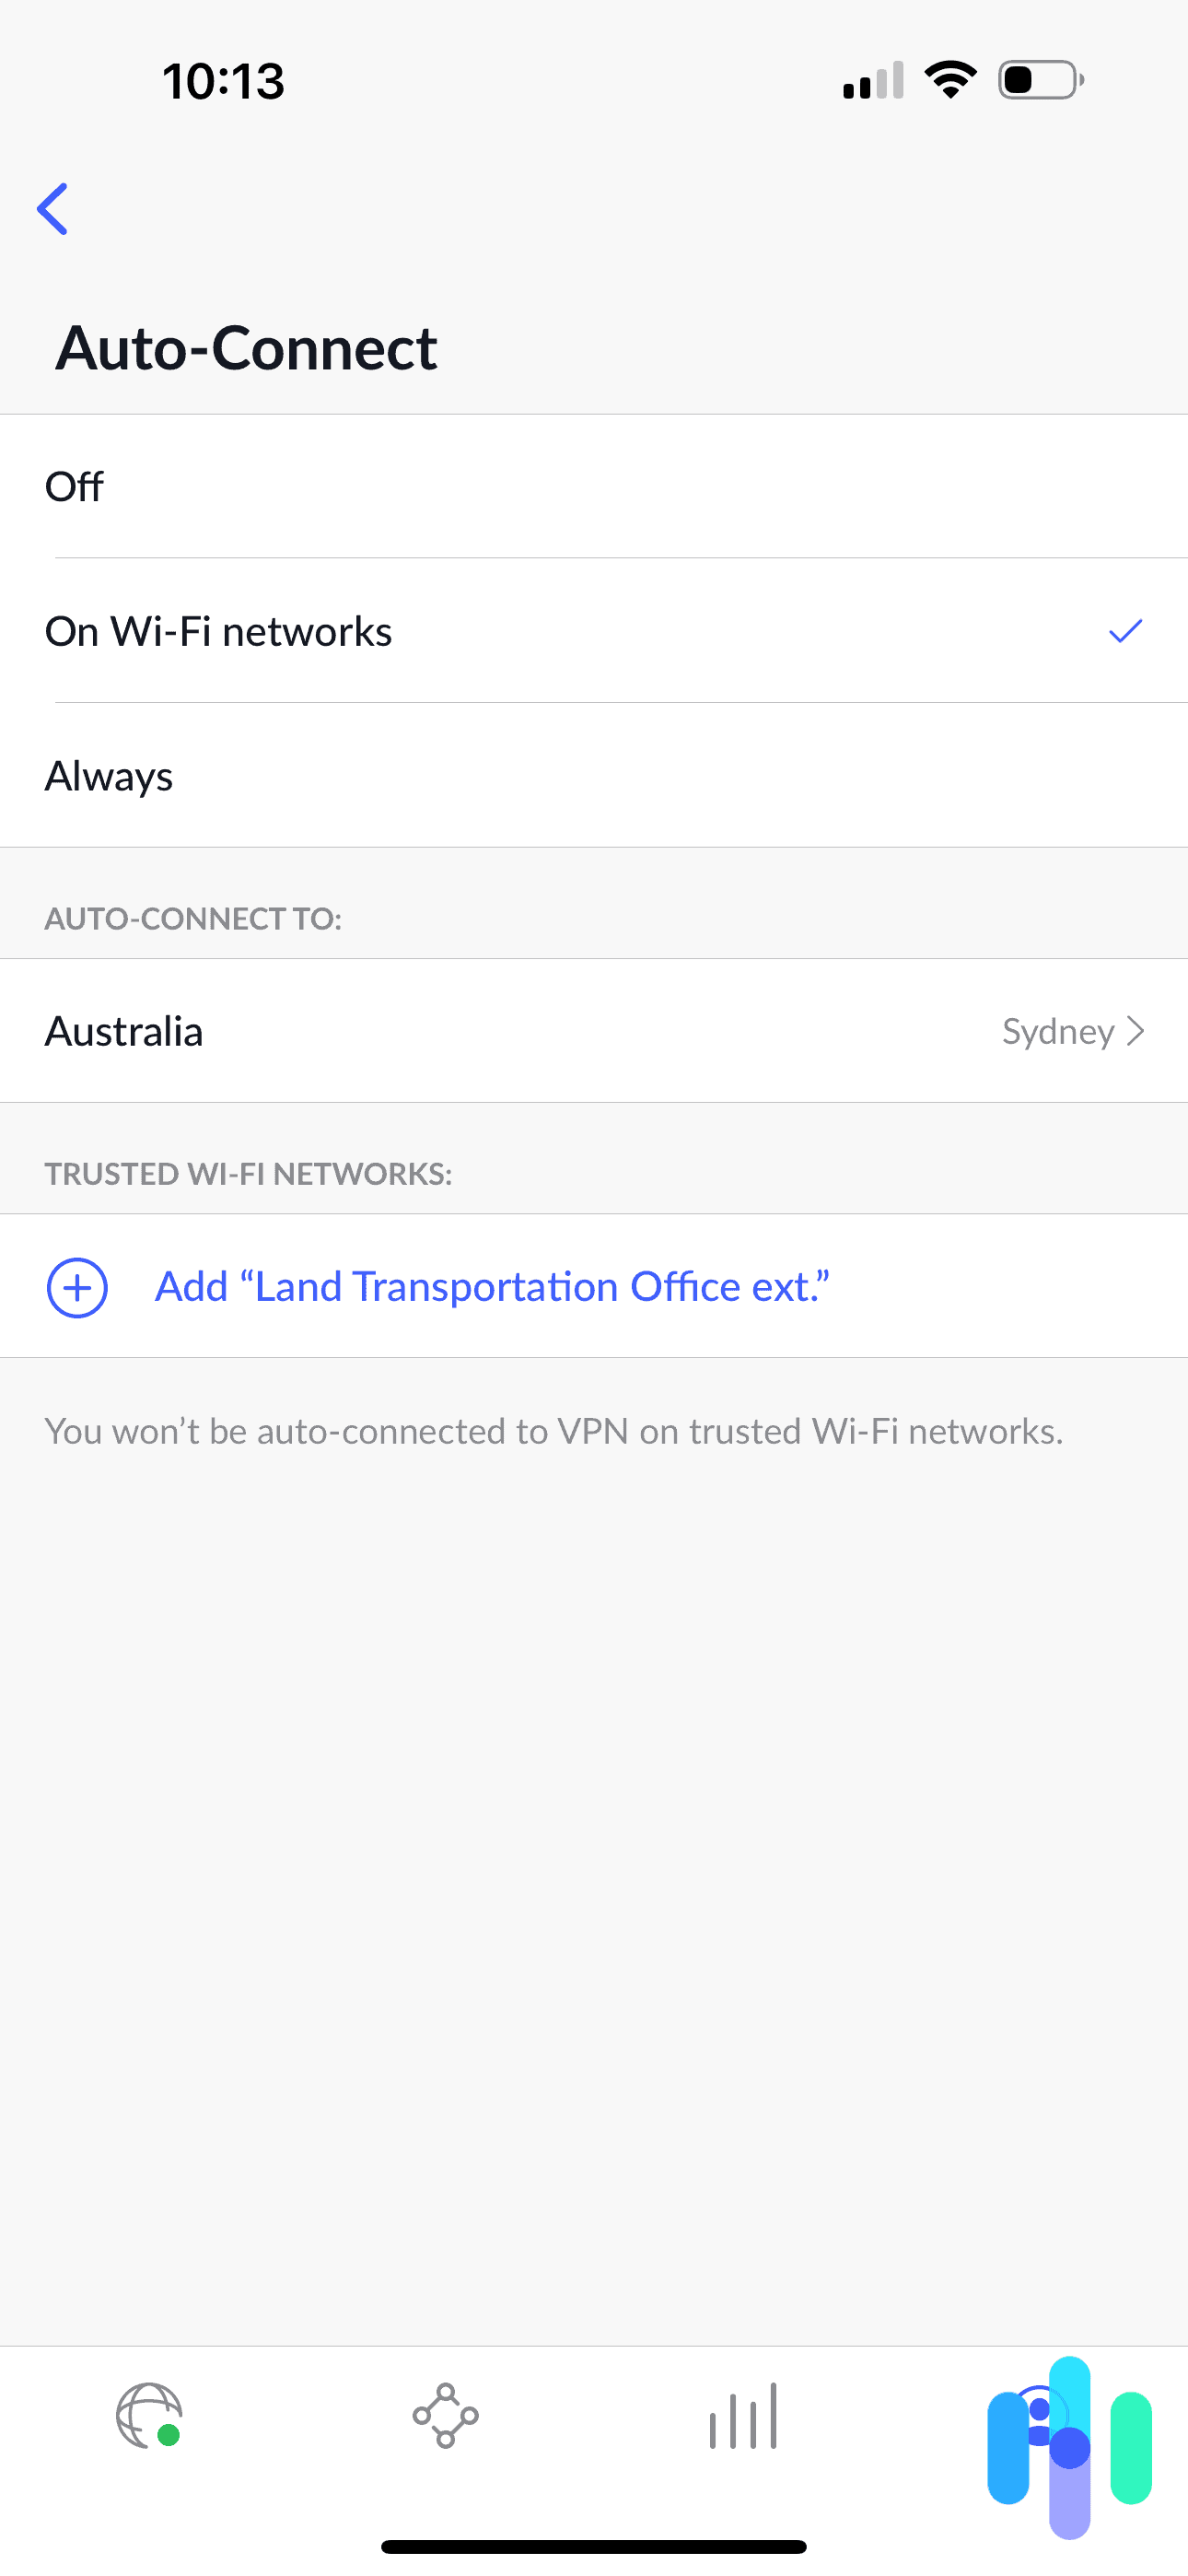 NordVPN auto-connect settings